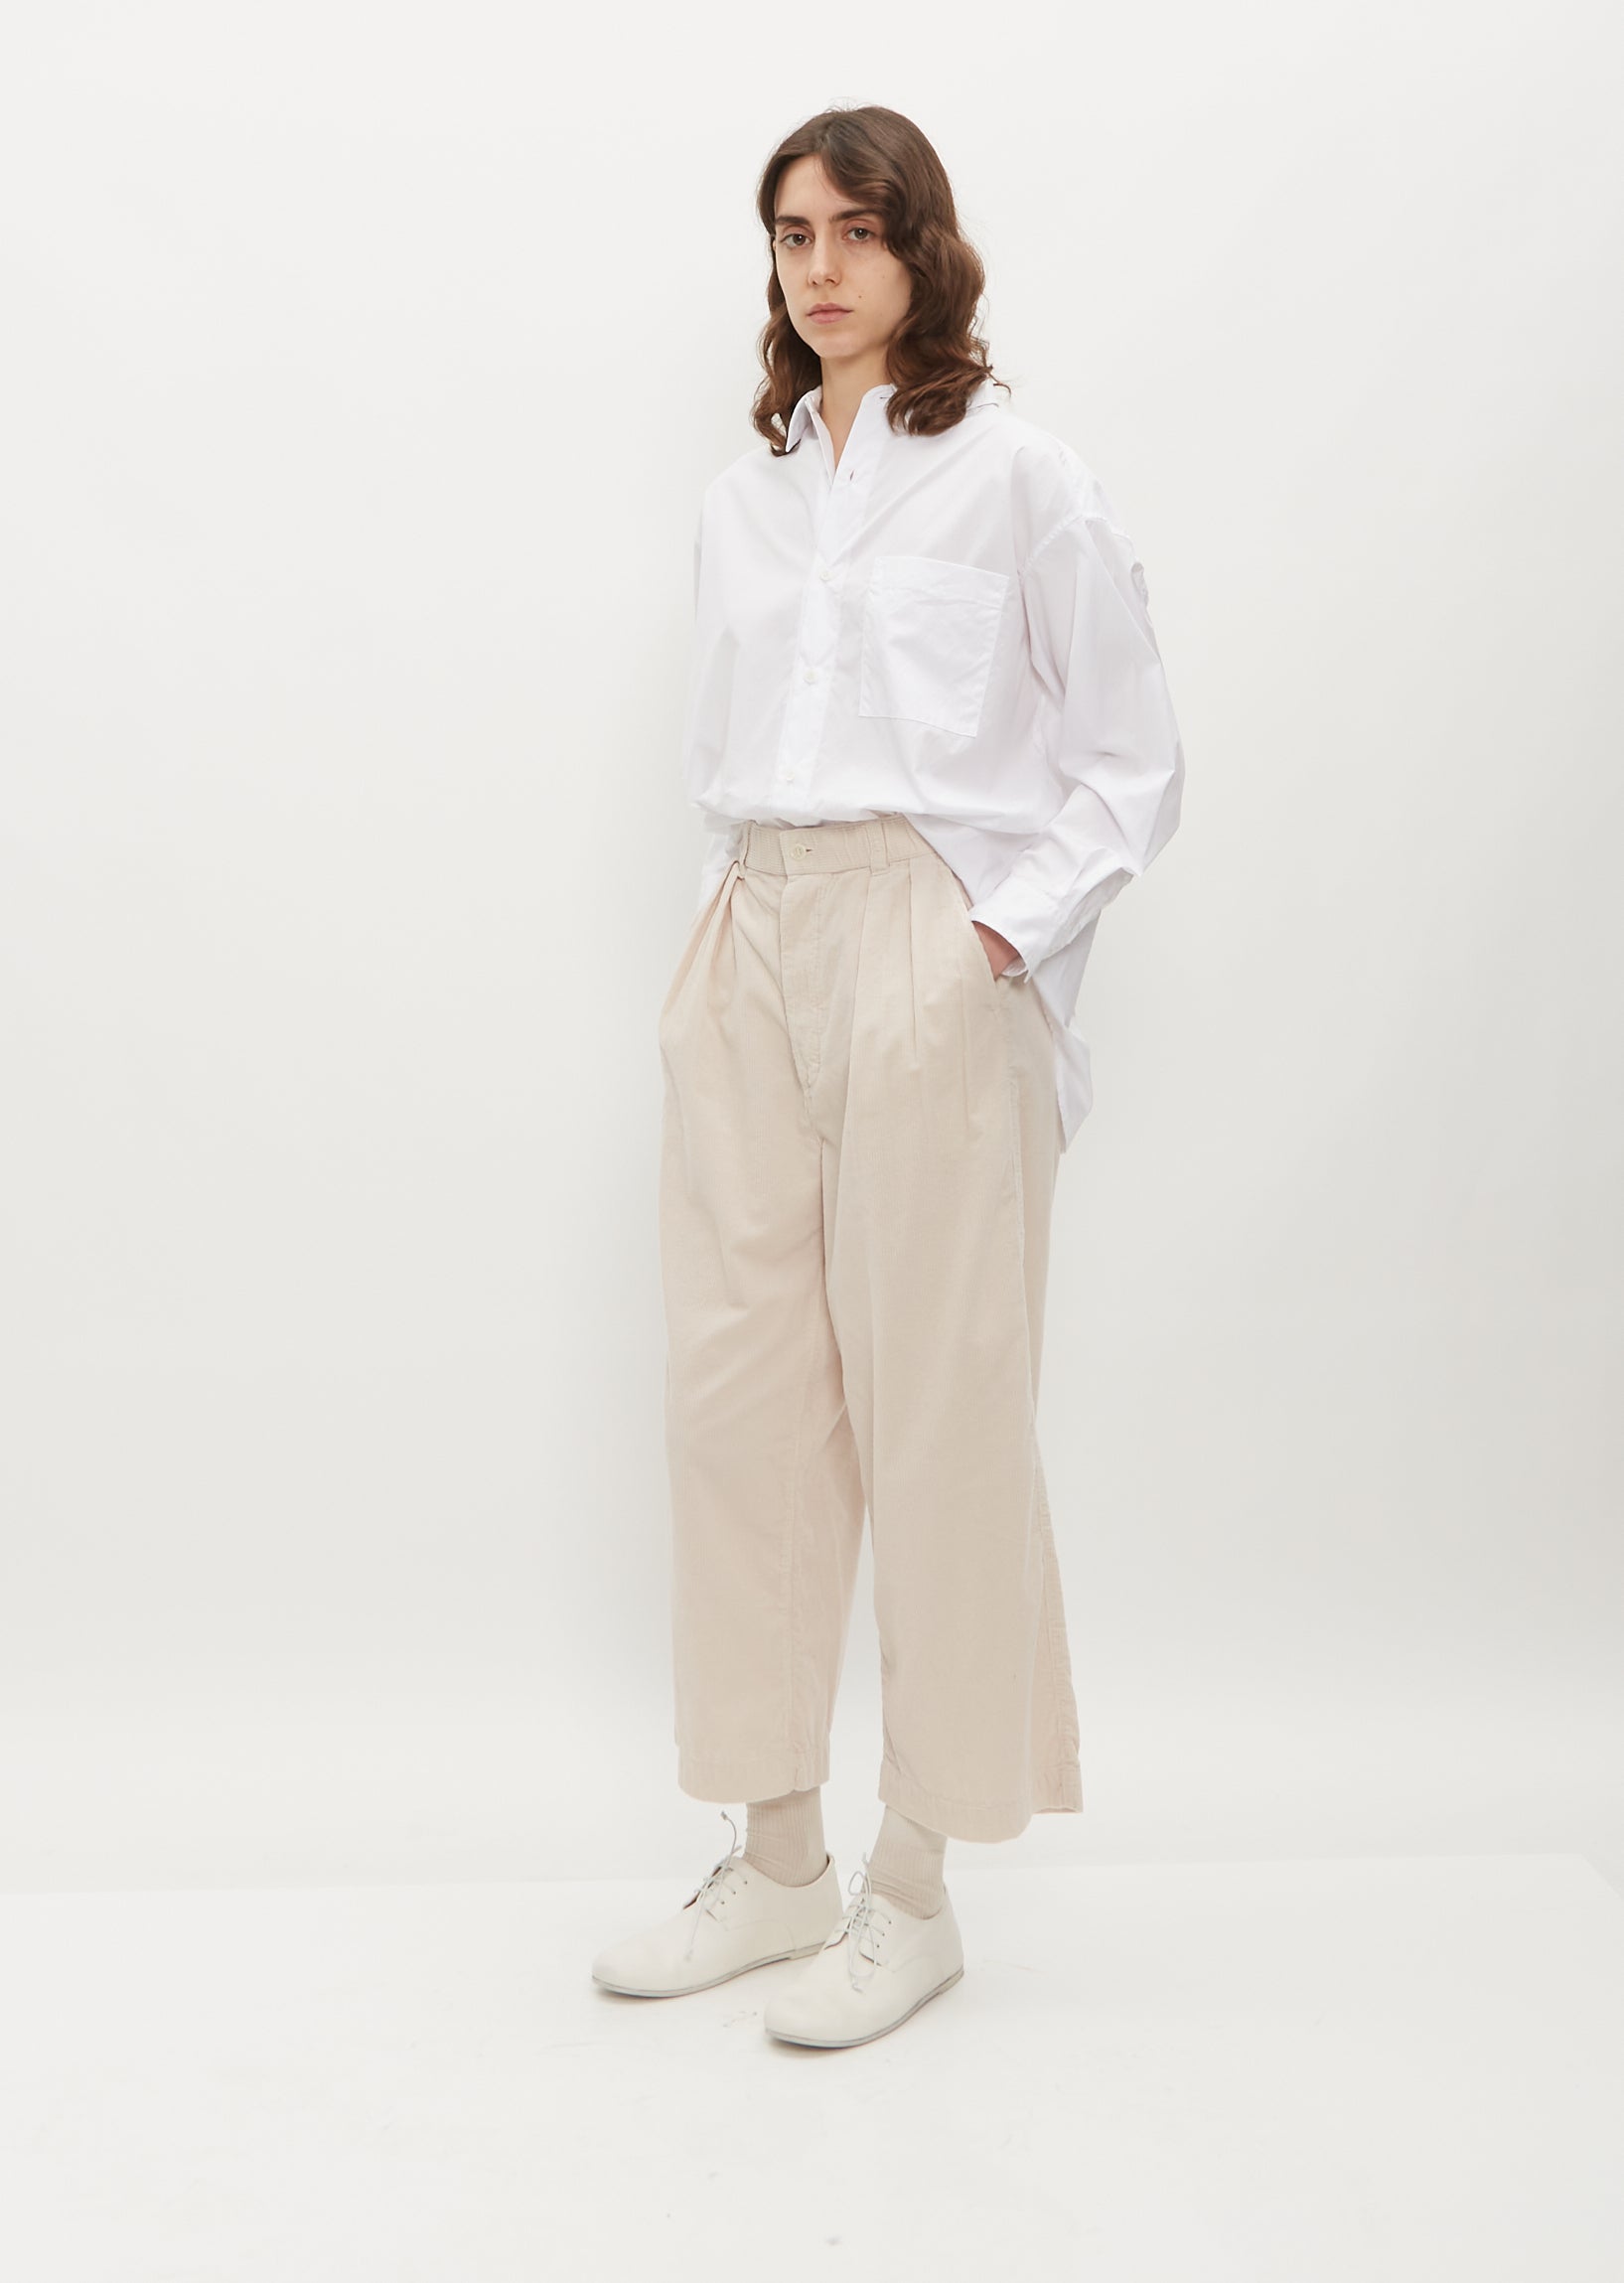 Corduroy Winter White Pants 80s, Pleated Trousers, Women Baggy Dress Pants  -  Australia